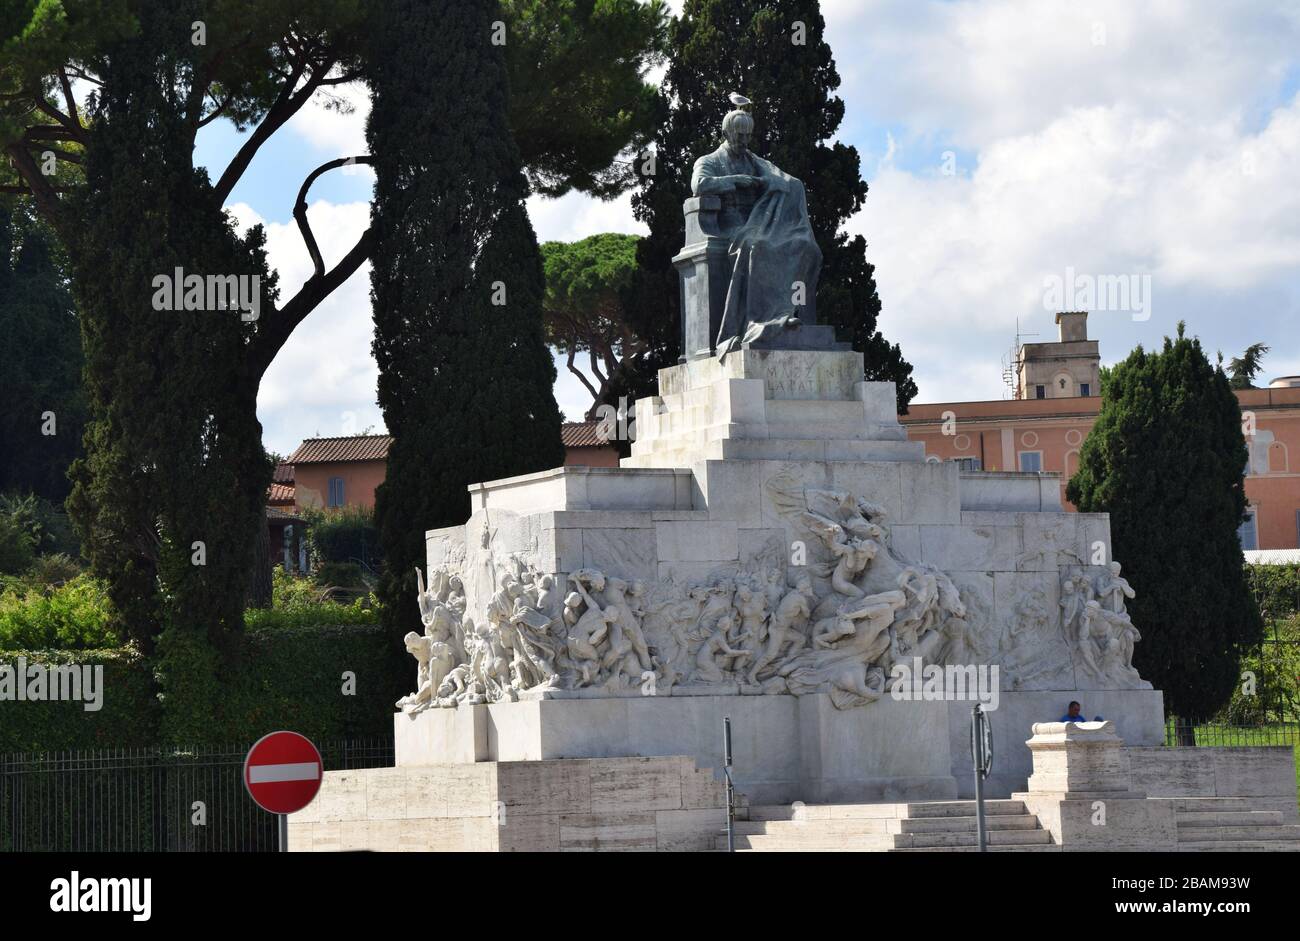 Monument to Giuseppe Mazzini - A Mazzini La Patria Monument in the city of Rome, Italy Stock Photo